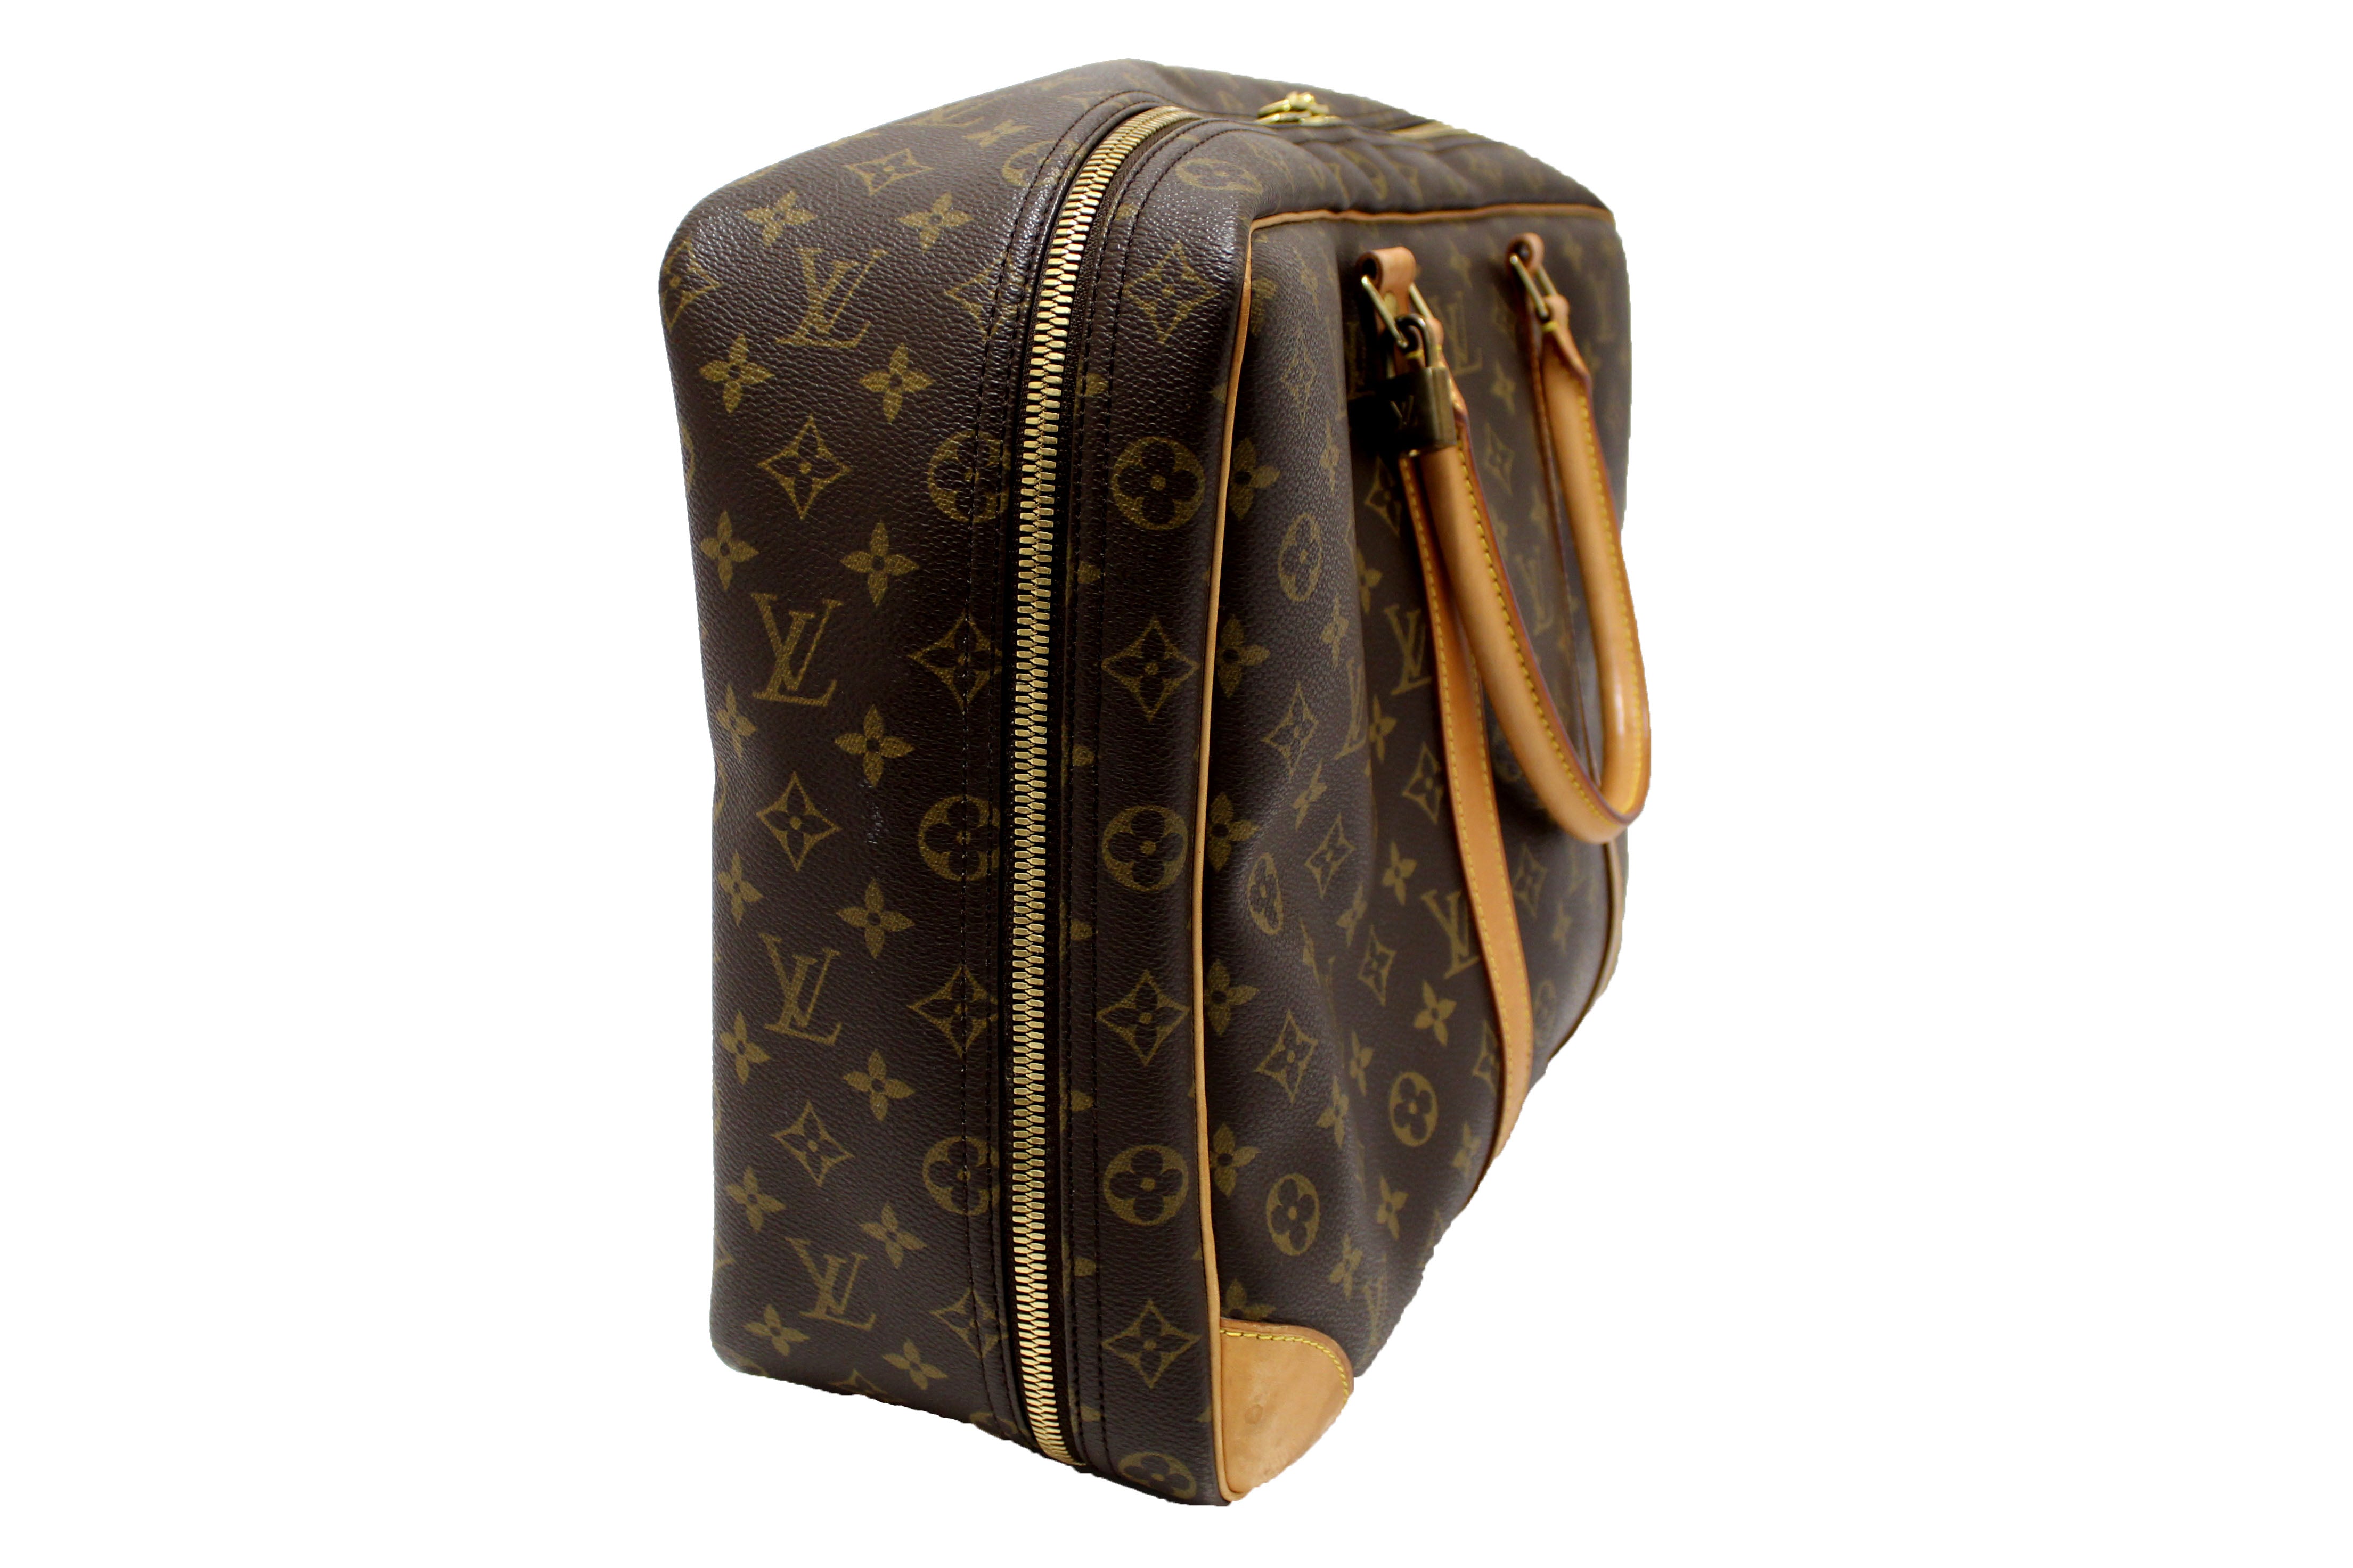 Authentic Louis Vuitton Monogram Canvas Sirius 45 Luggage Carry On Travel Bag